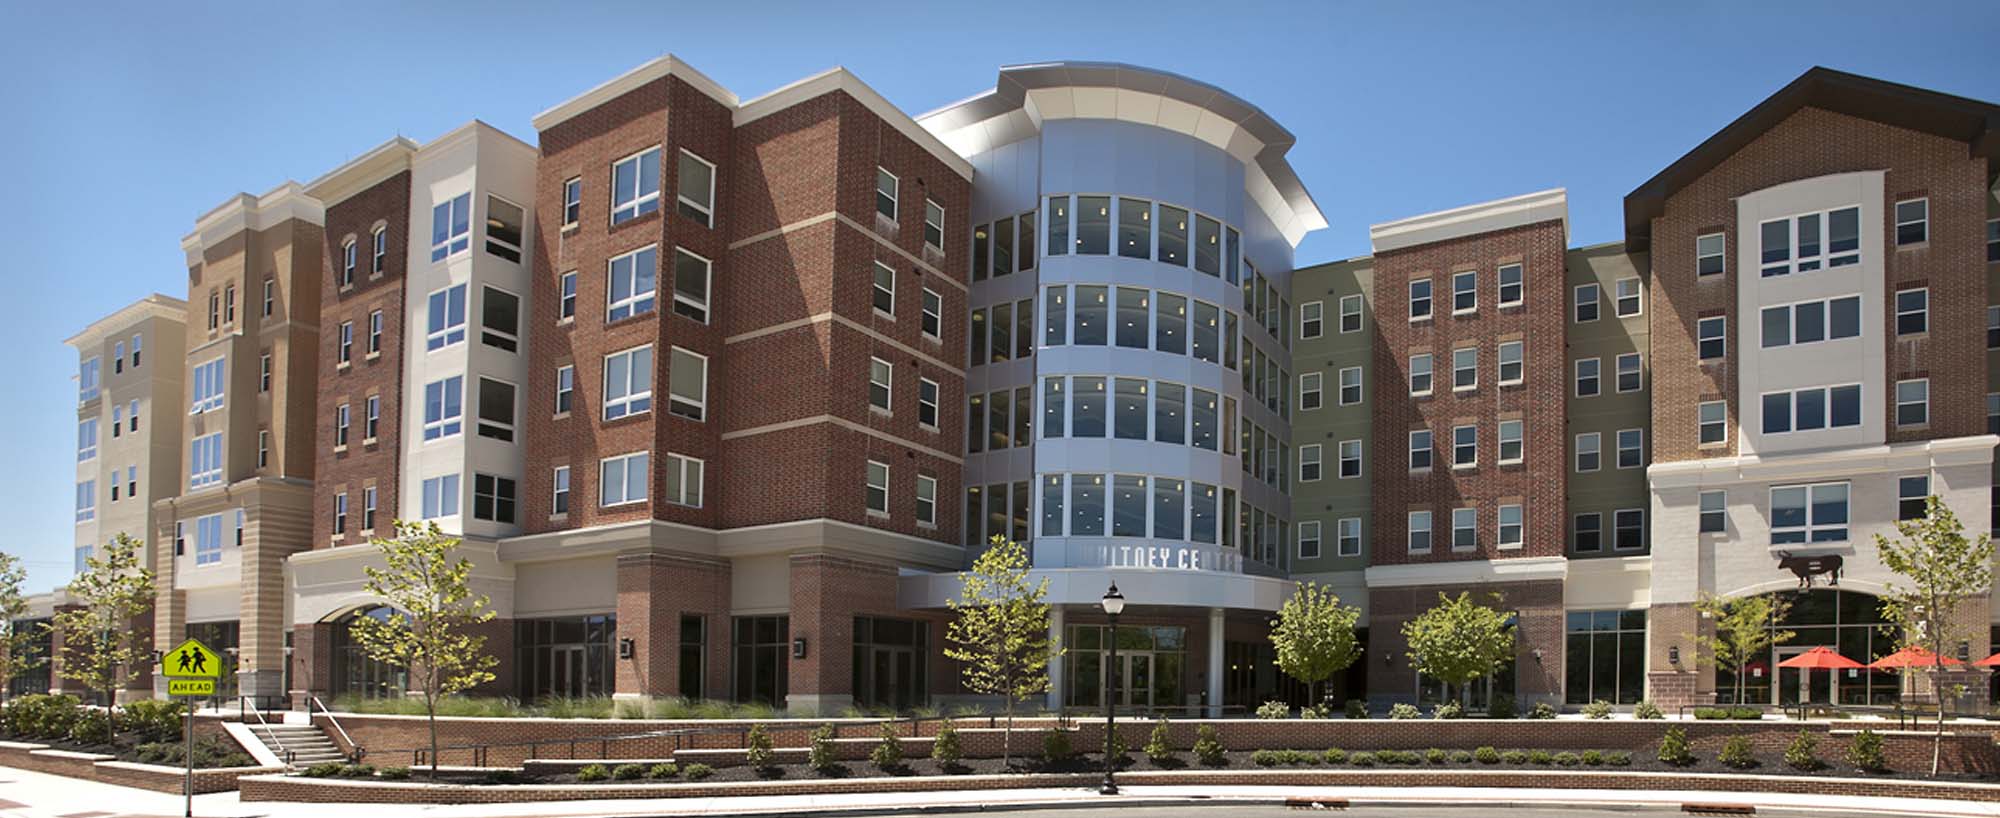 Rowan University breaks ground on $30 million student center addition in  Glassboro, N.J.